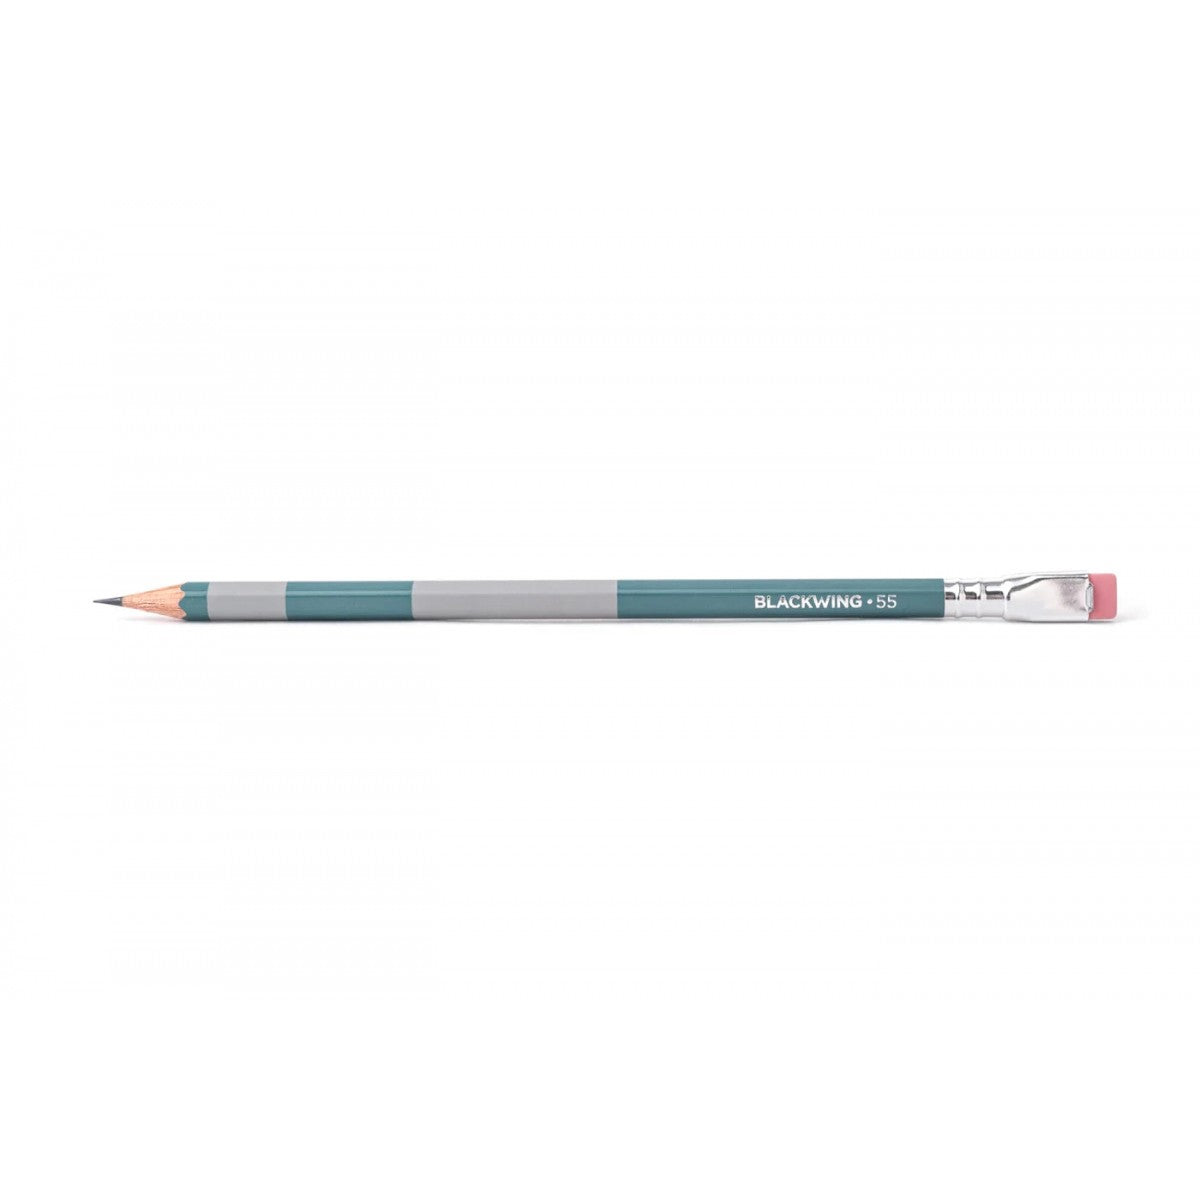 Single Blackwing Pencil - Volume 55